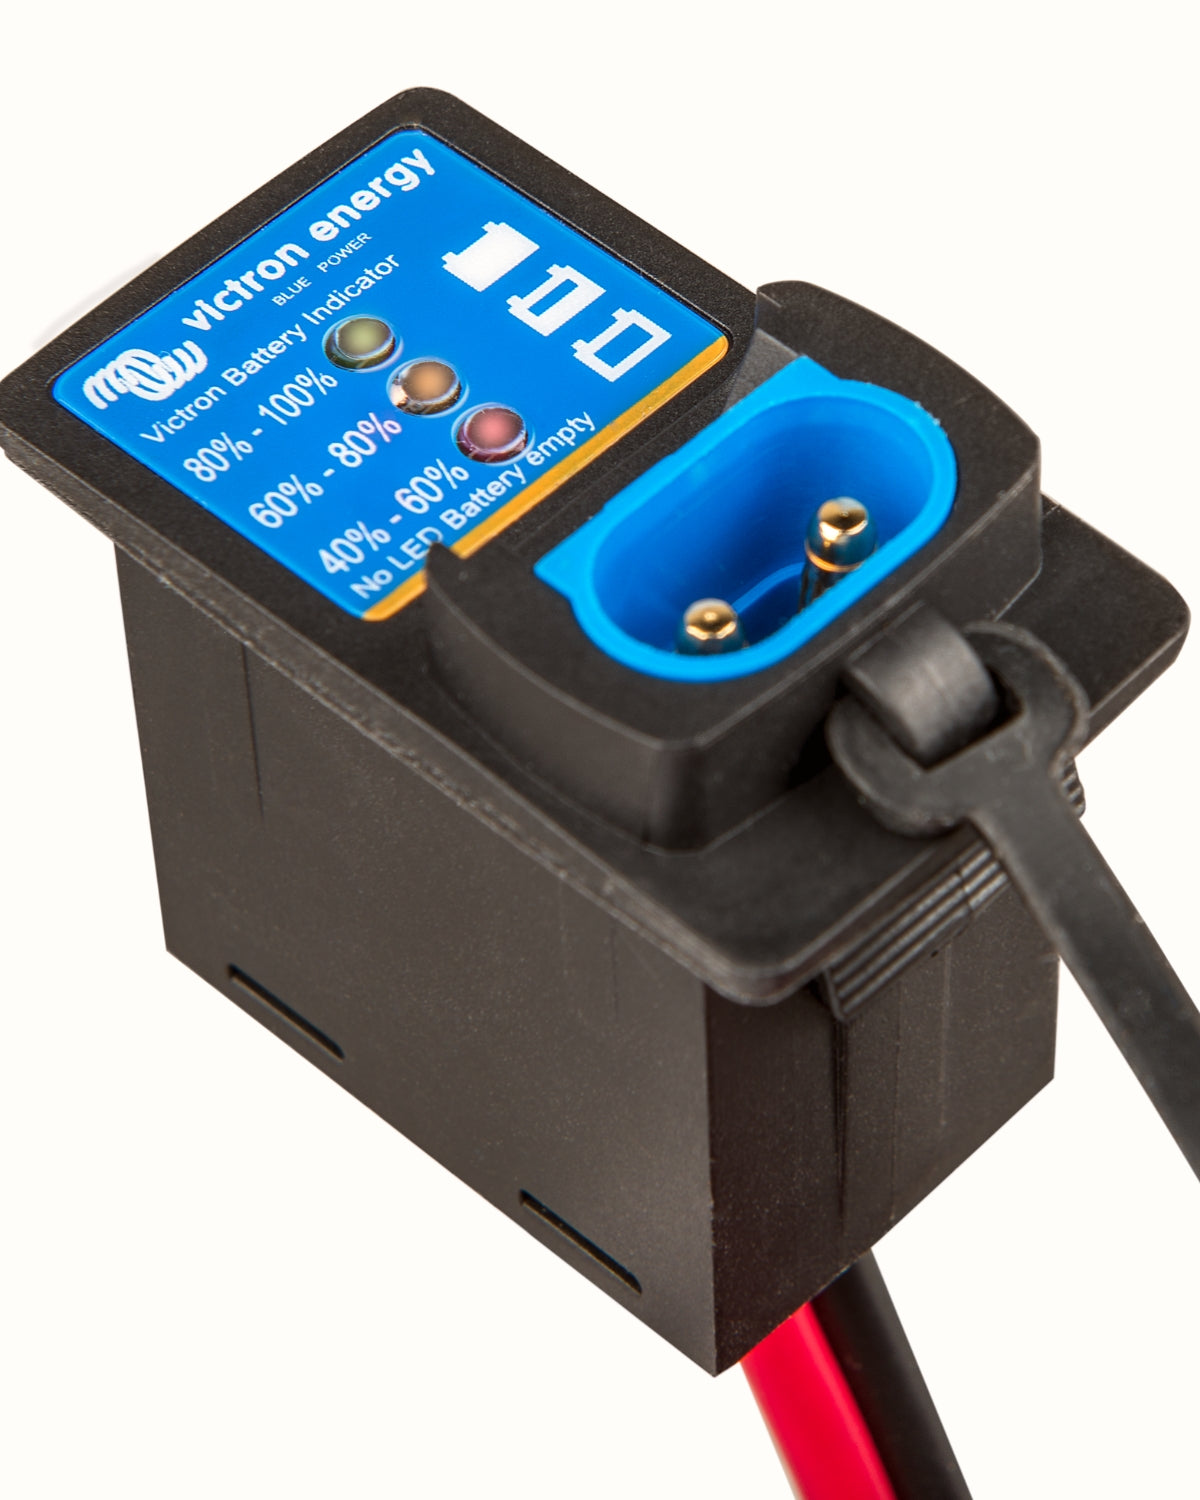 Panou Indicator Baterie Redresor Victron Blue Smart